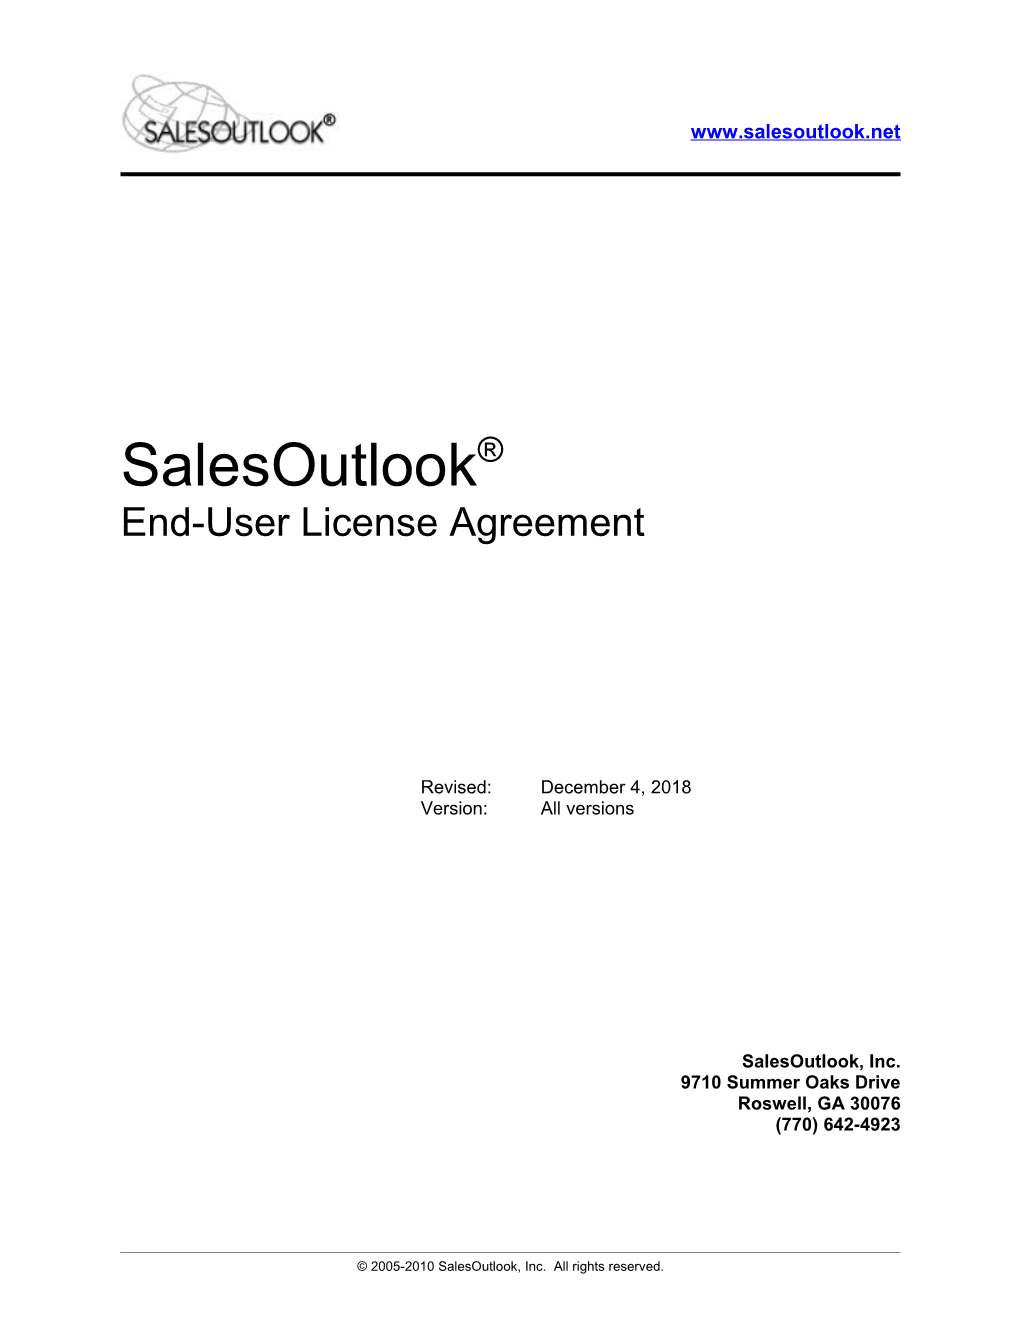 Salesoutlook - End User License Agreement